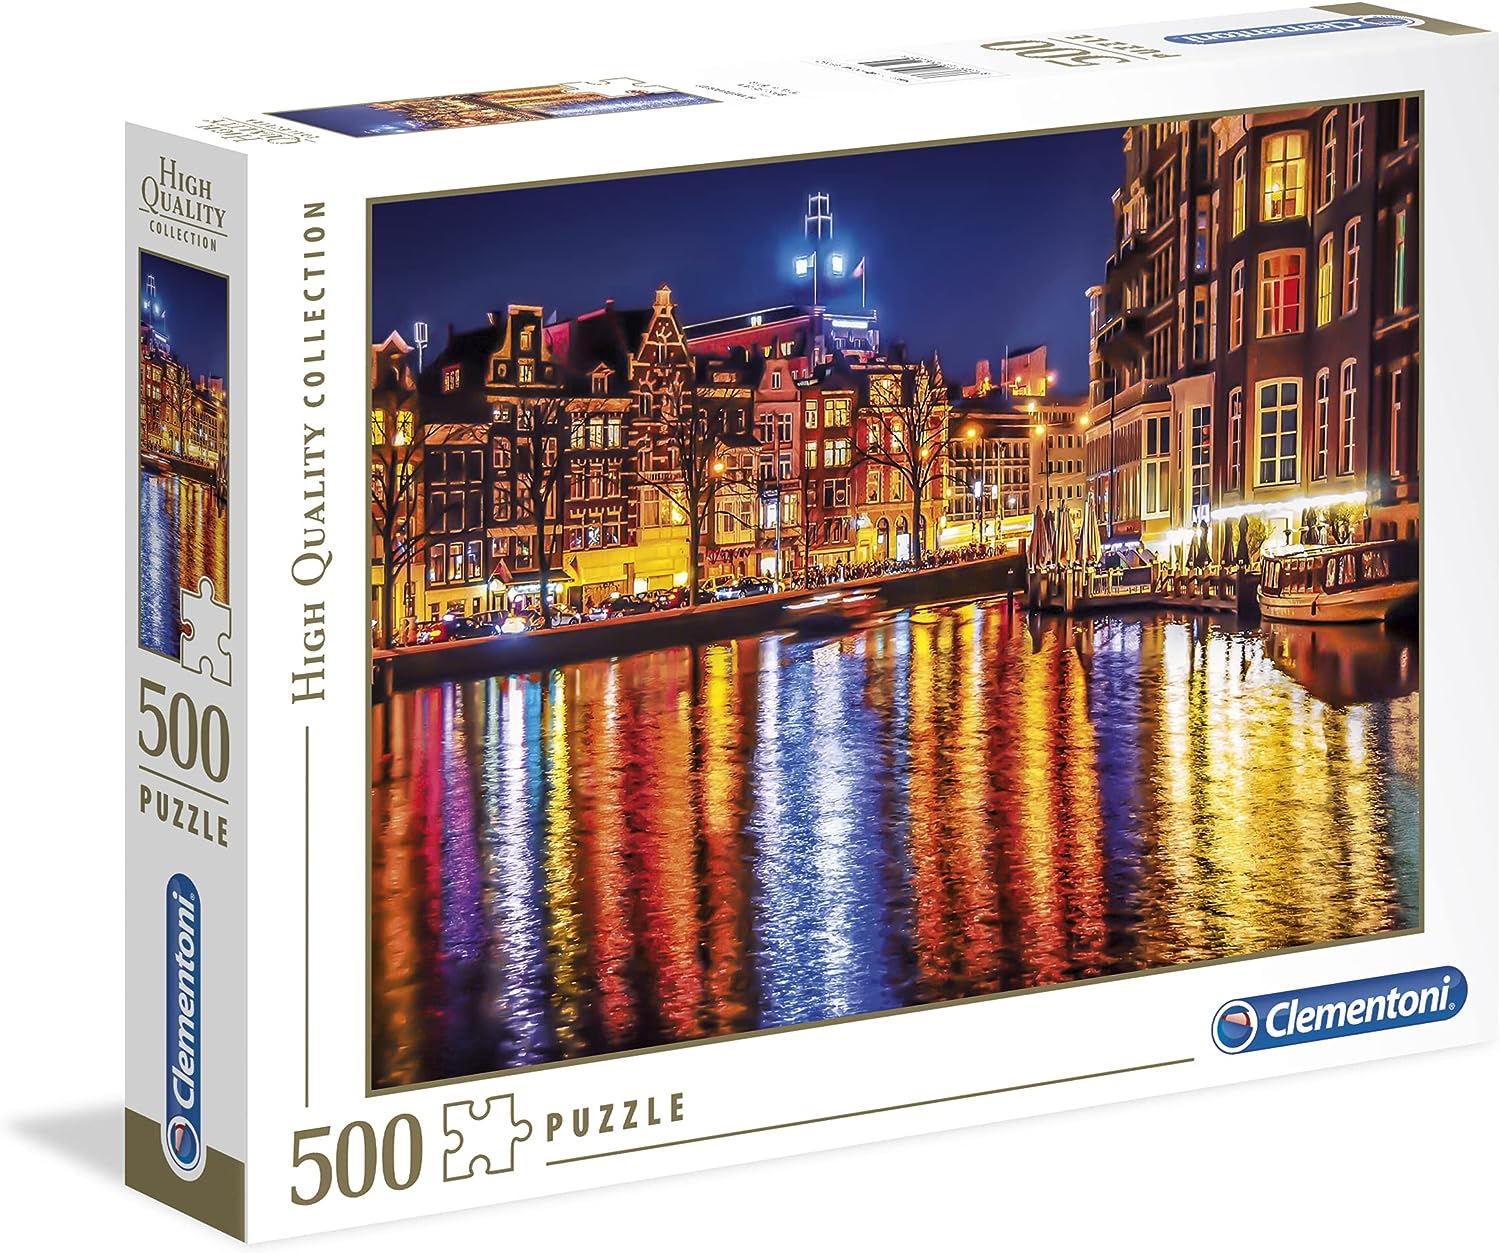 Puzzle 500 Piezas | Amsterdam Clementoni